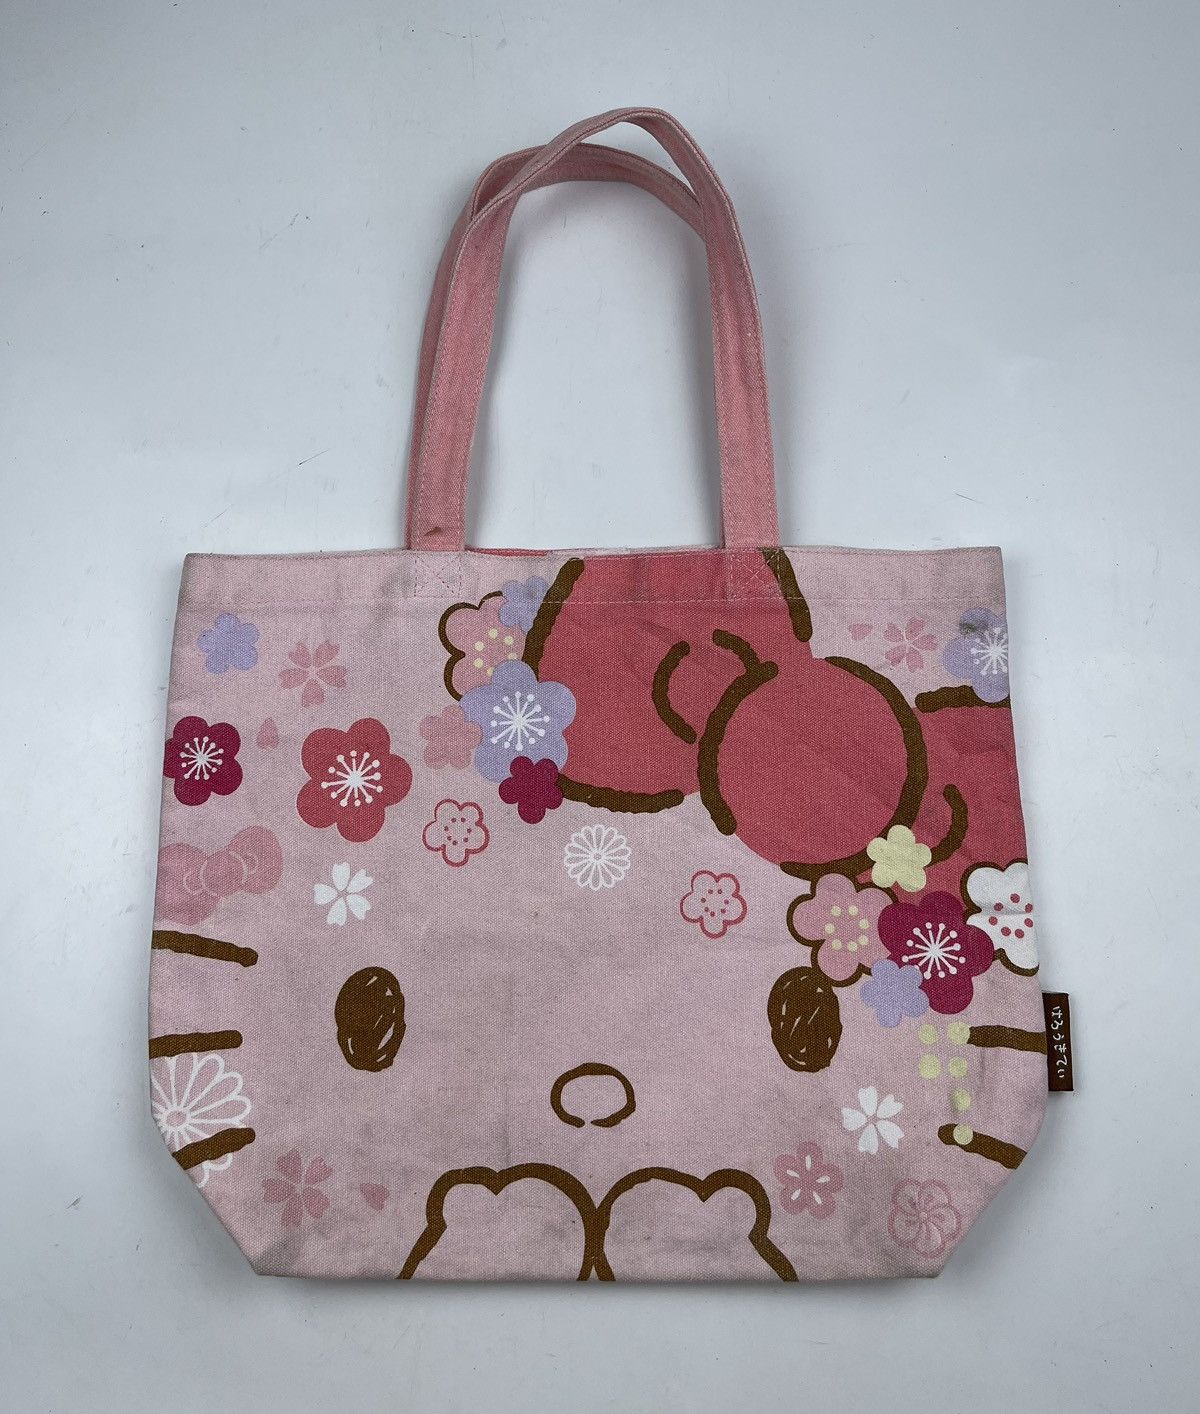 Japanese Brand - hello kitty tote bag tc24 - 1